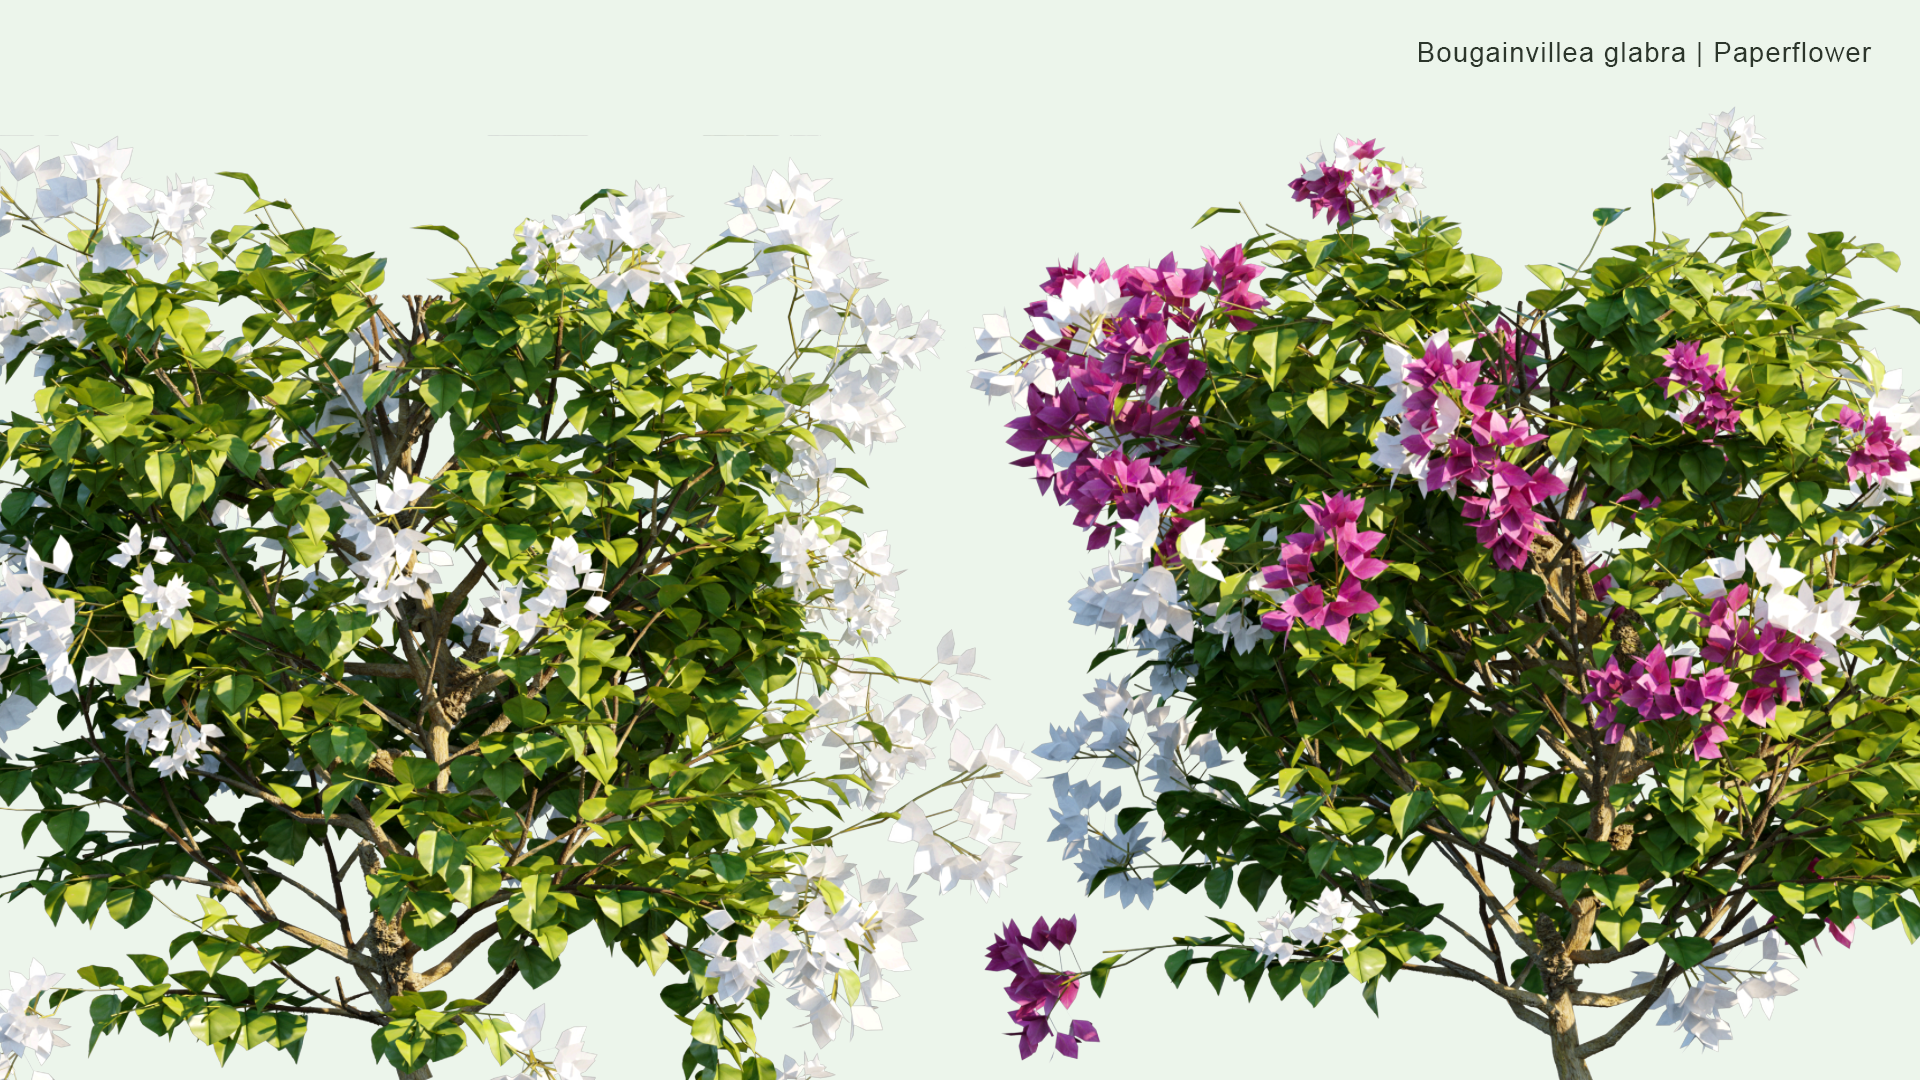 2D Bougainvillea Glabra - Lesser Bougainvillea, Paperflower